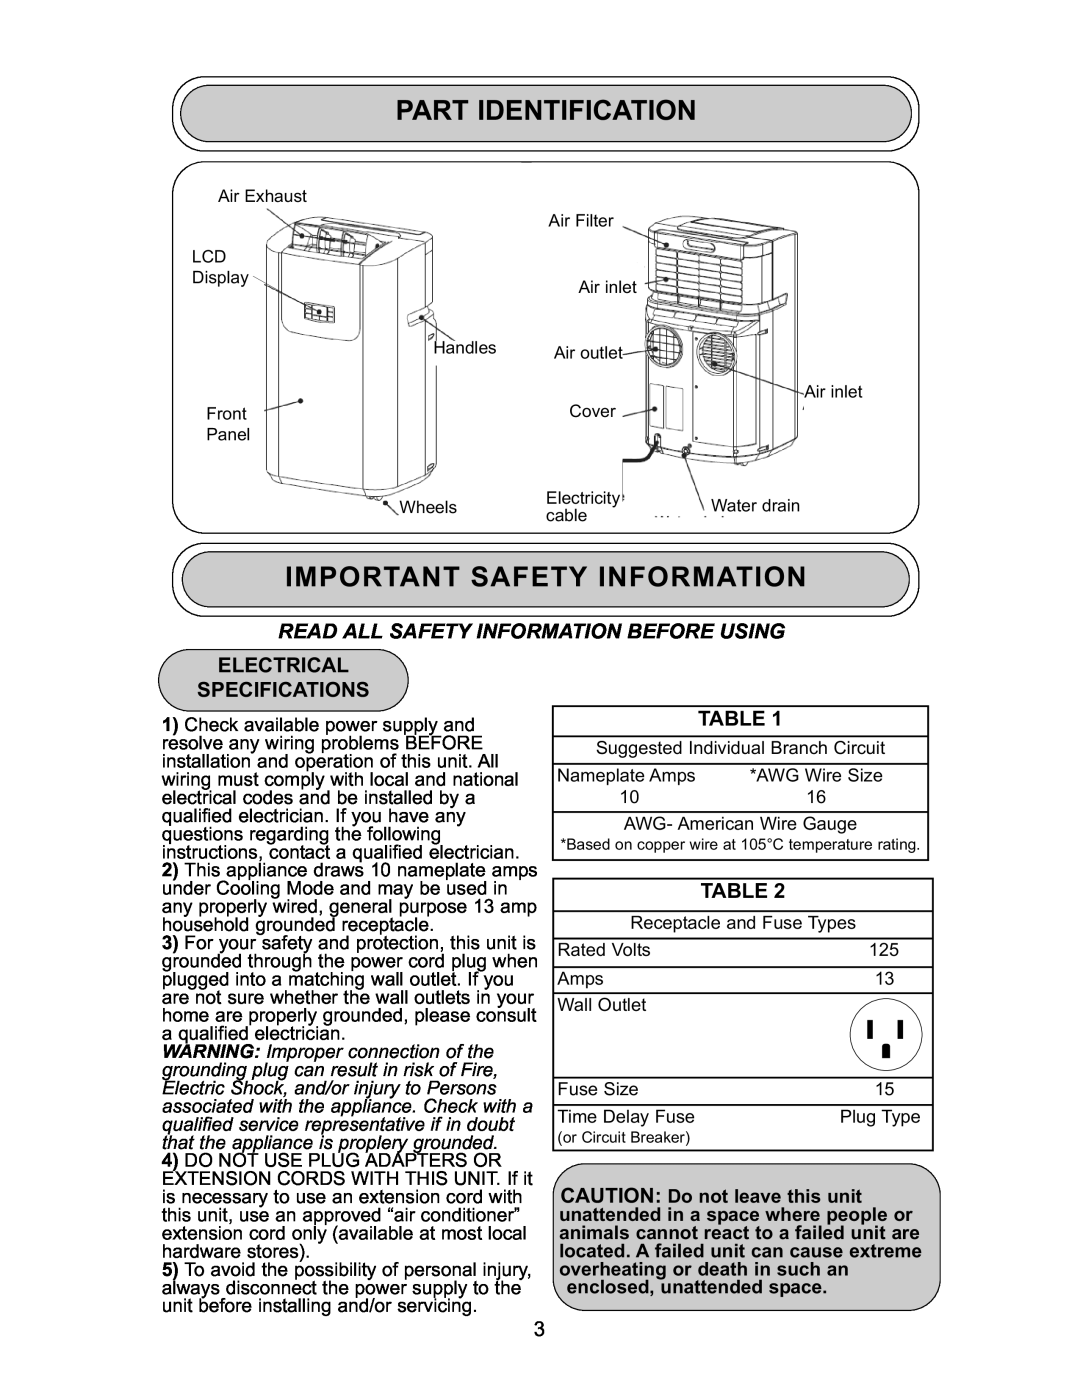 Danby DPAC 9009 manual Part Identification, Important Safety Information, Read All Safety Information Before Using 